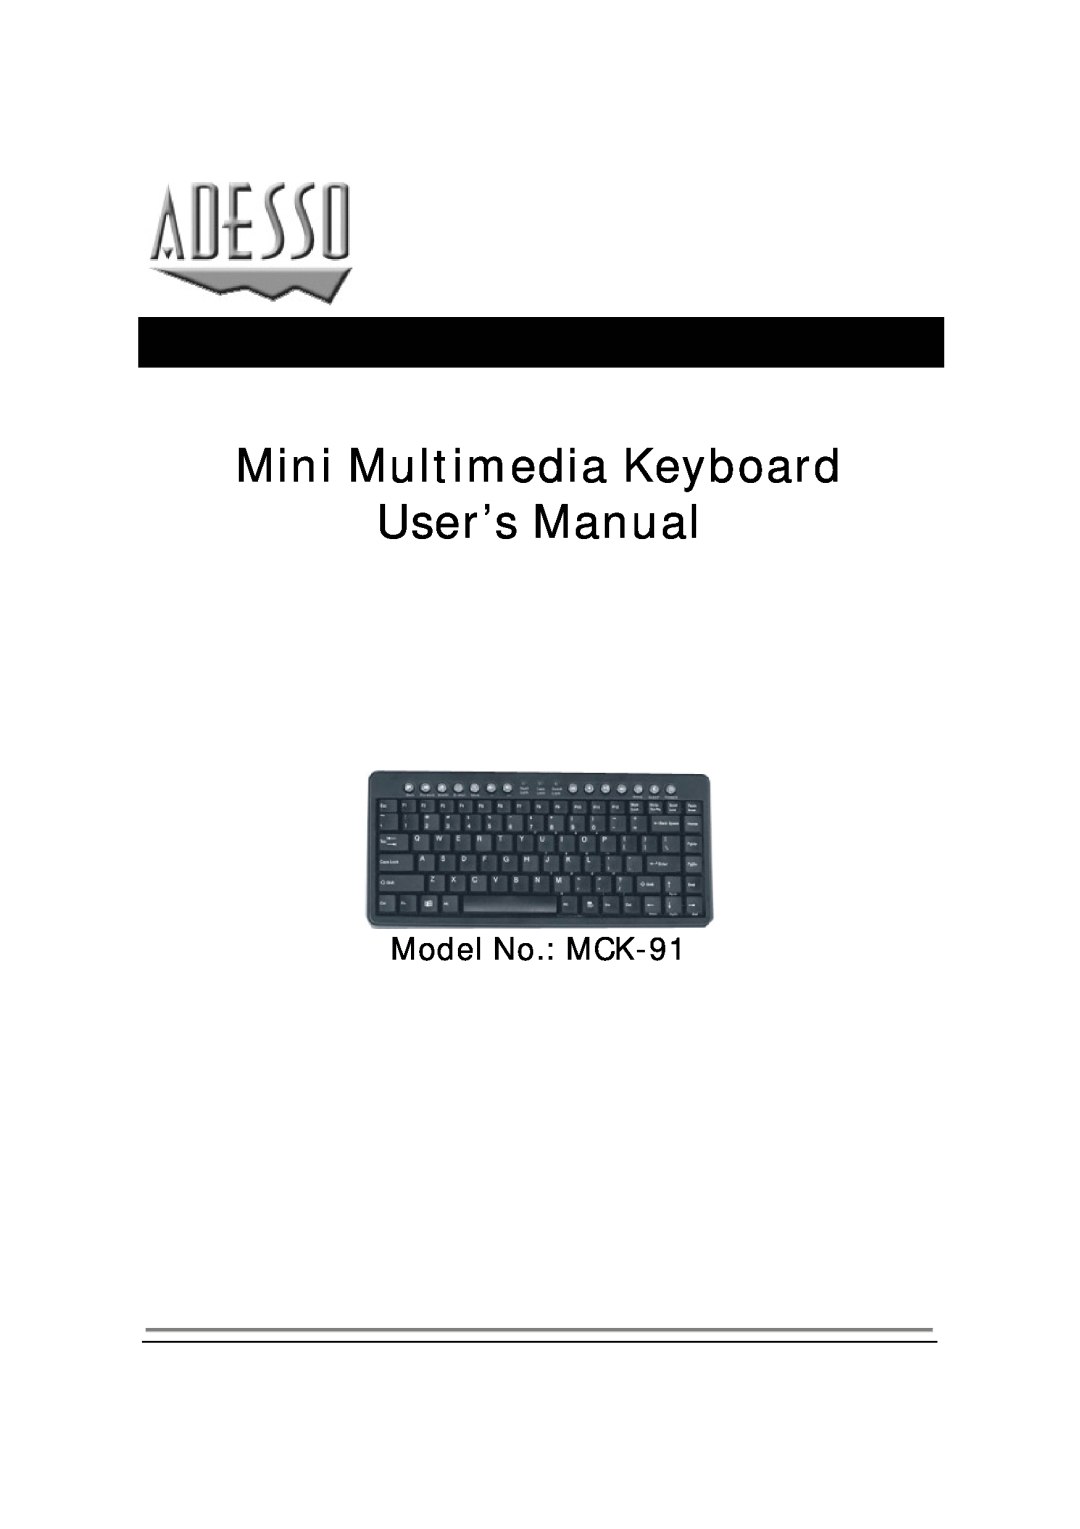 Adesso user manual Model No. MCK-91, Mini Multimedia Keyboard User’s Manual 